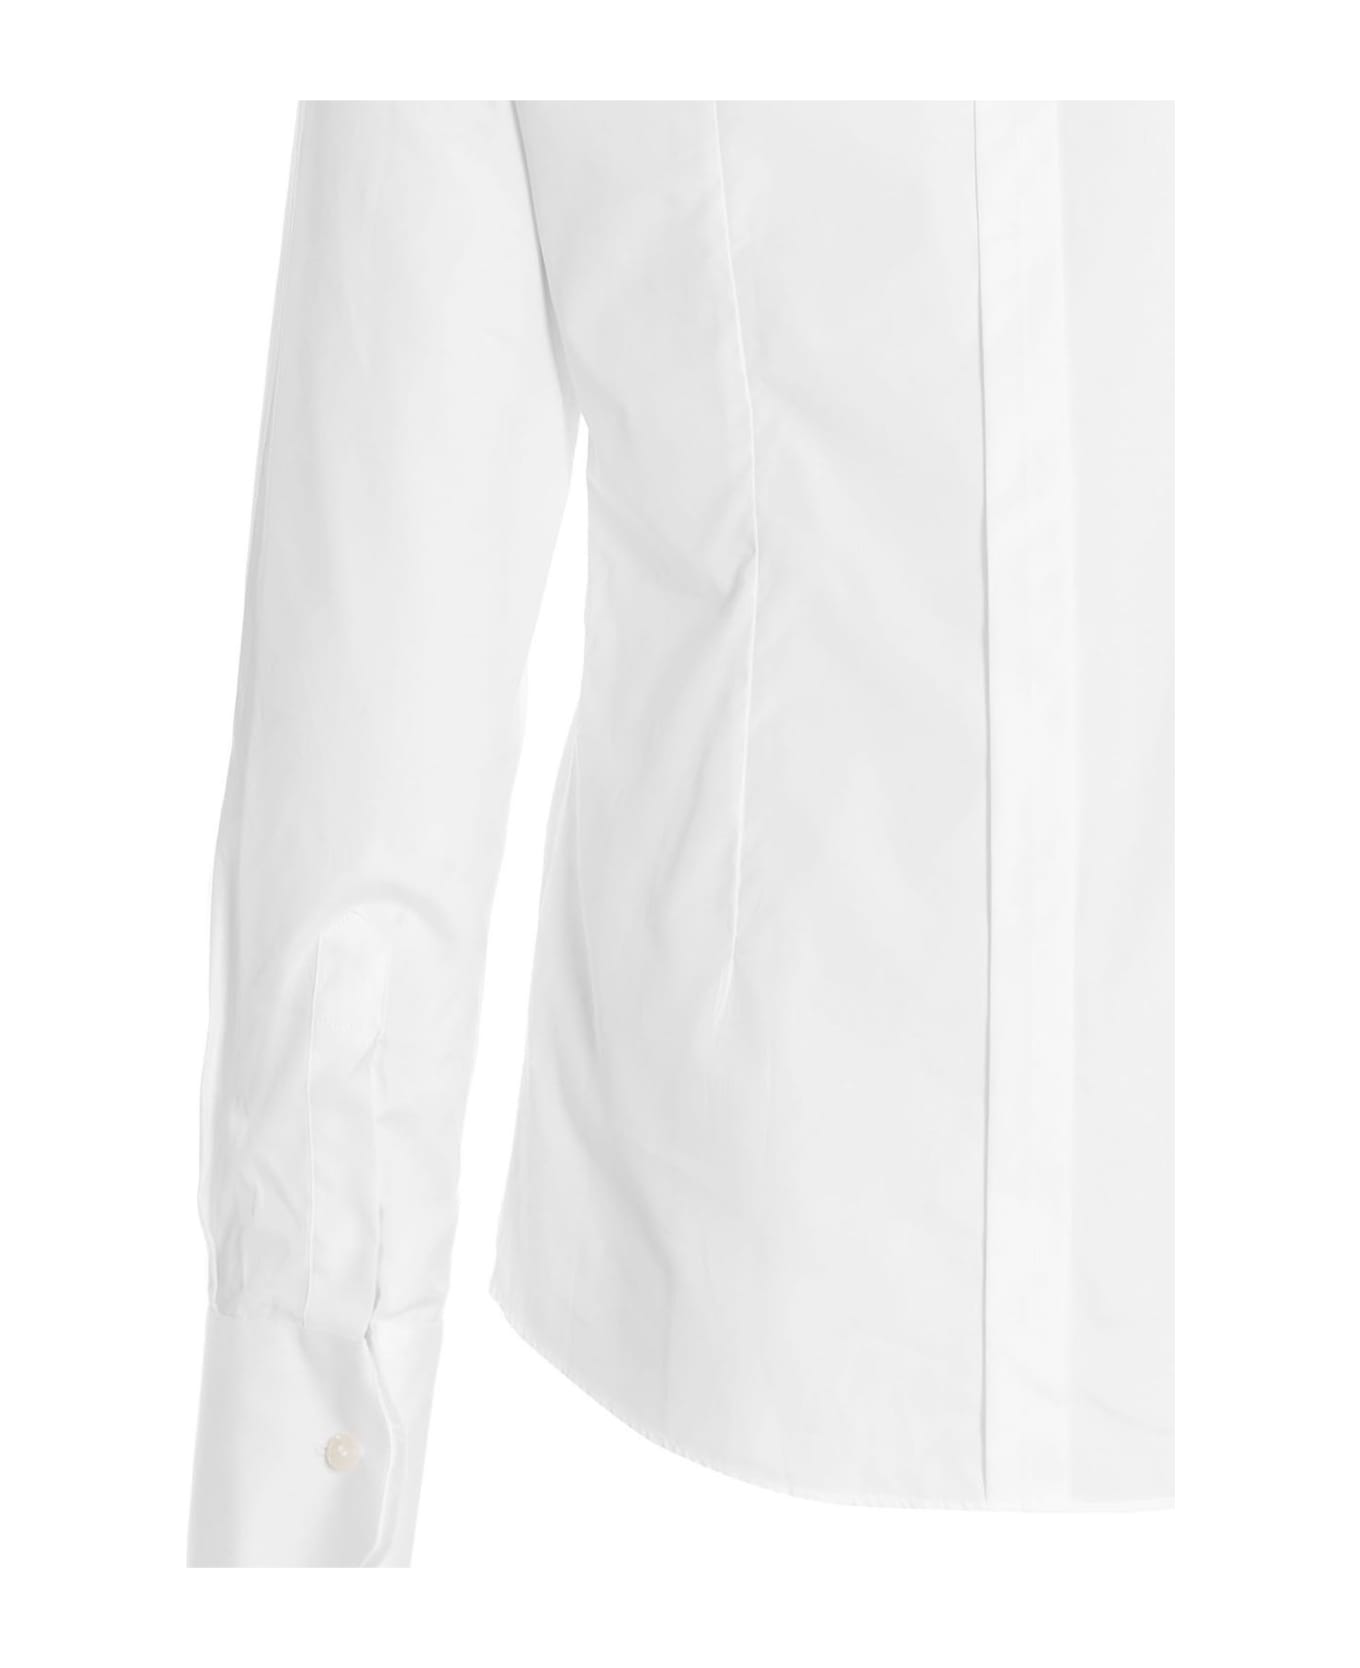 Dolce & Gabbana 'deep South' Shirt - White